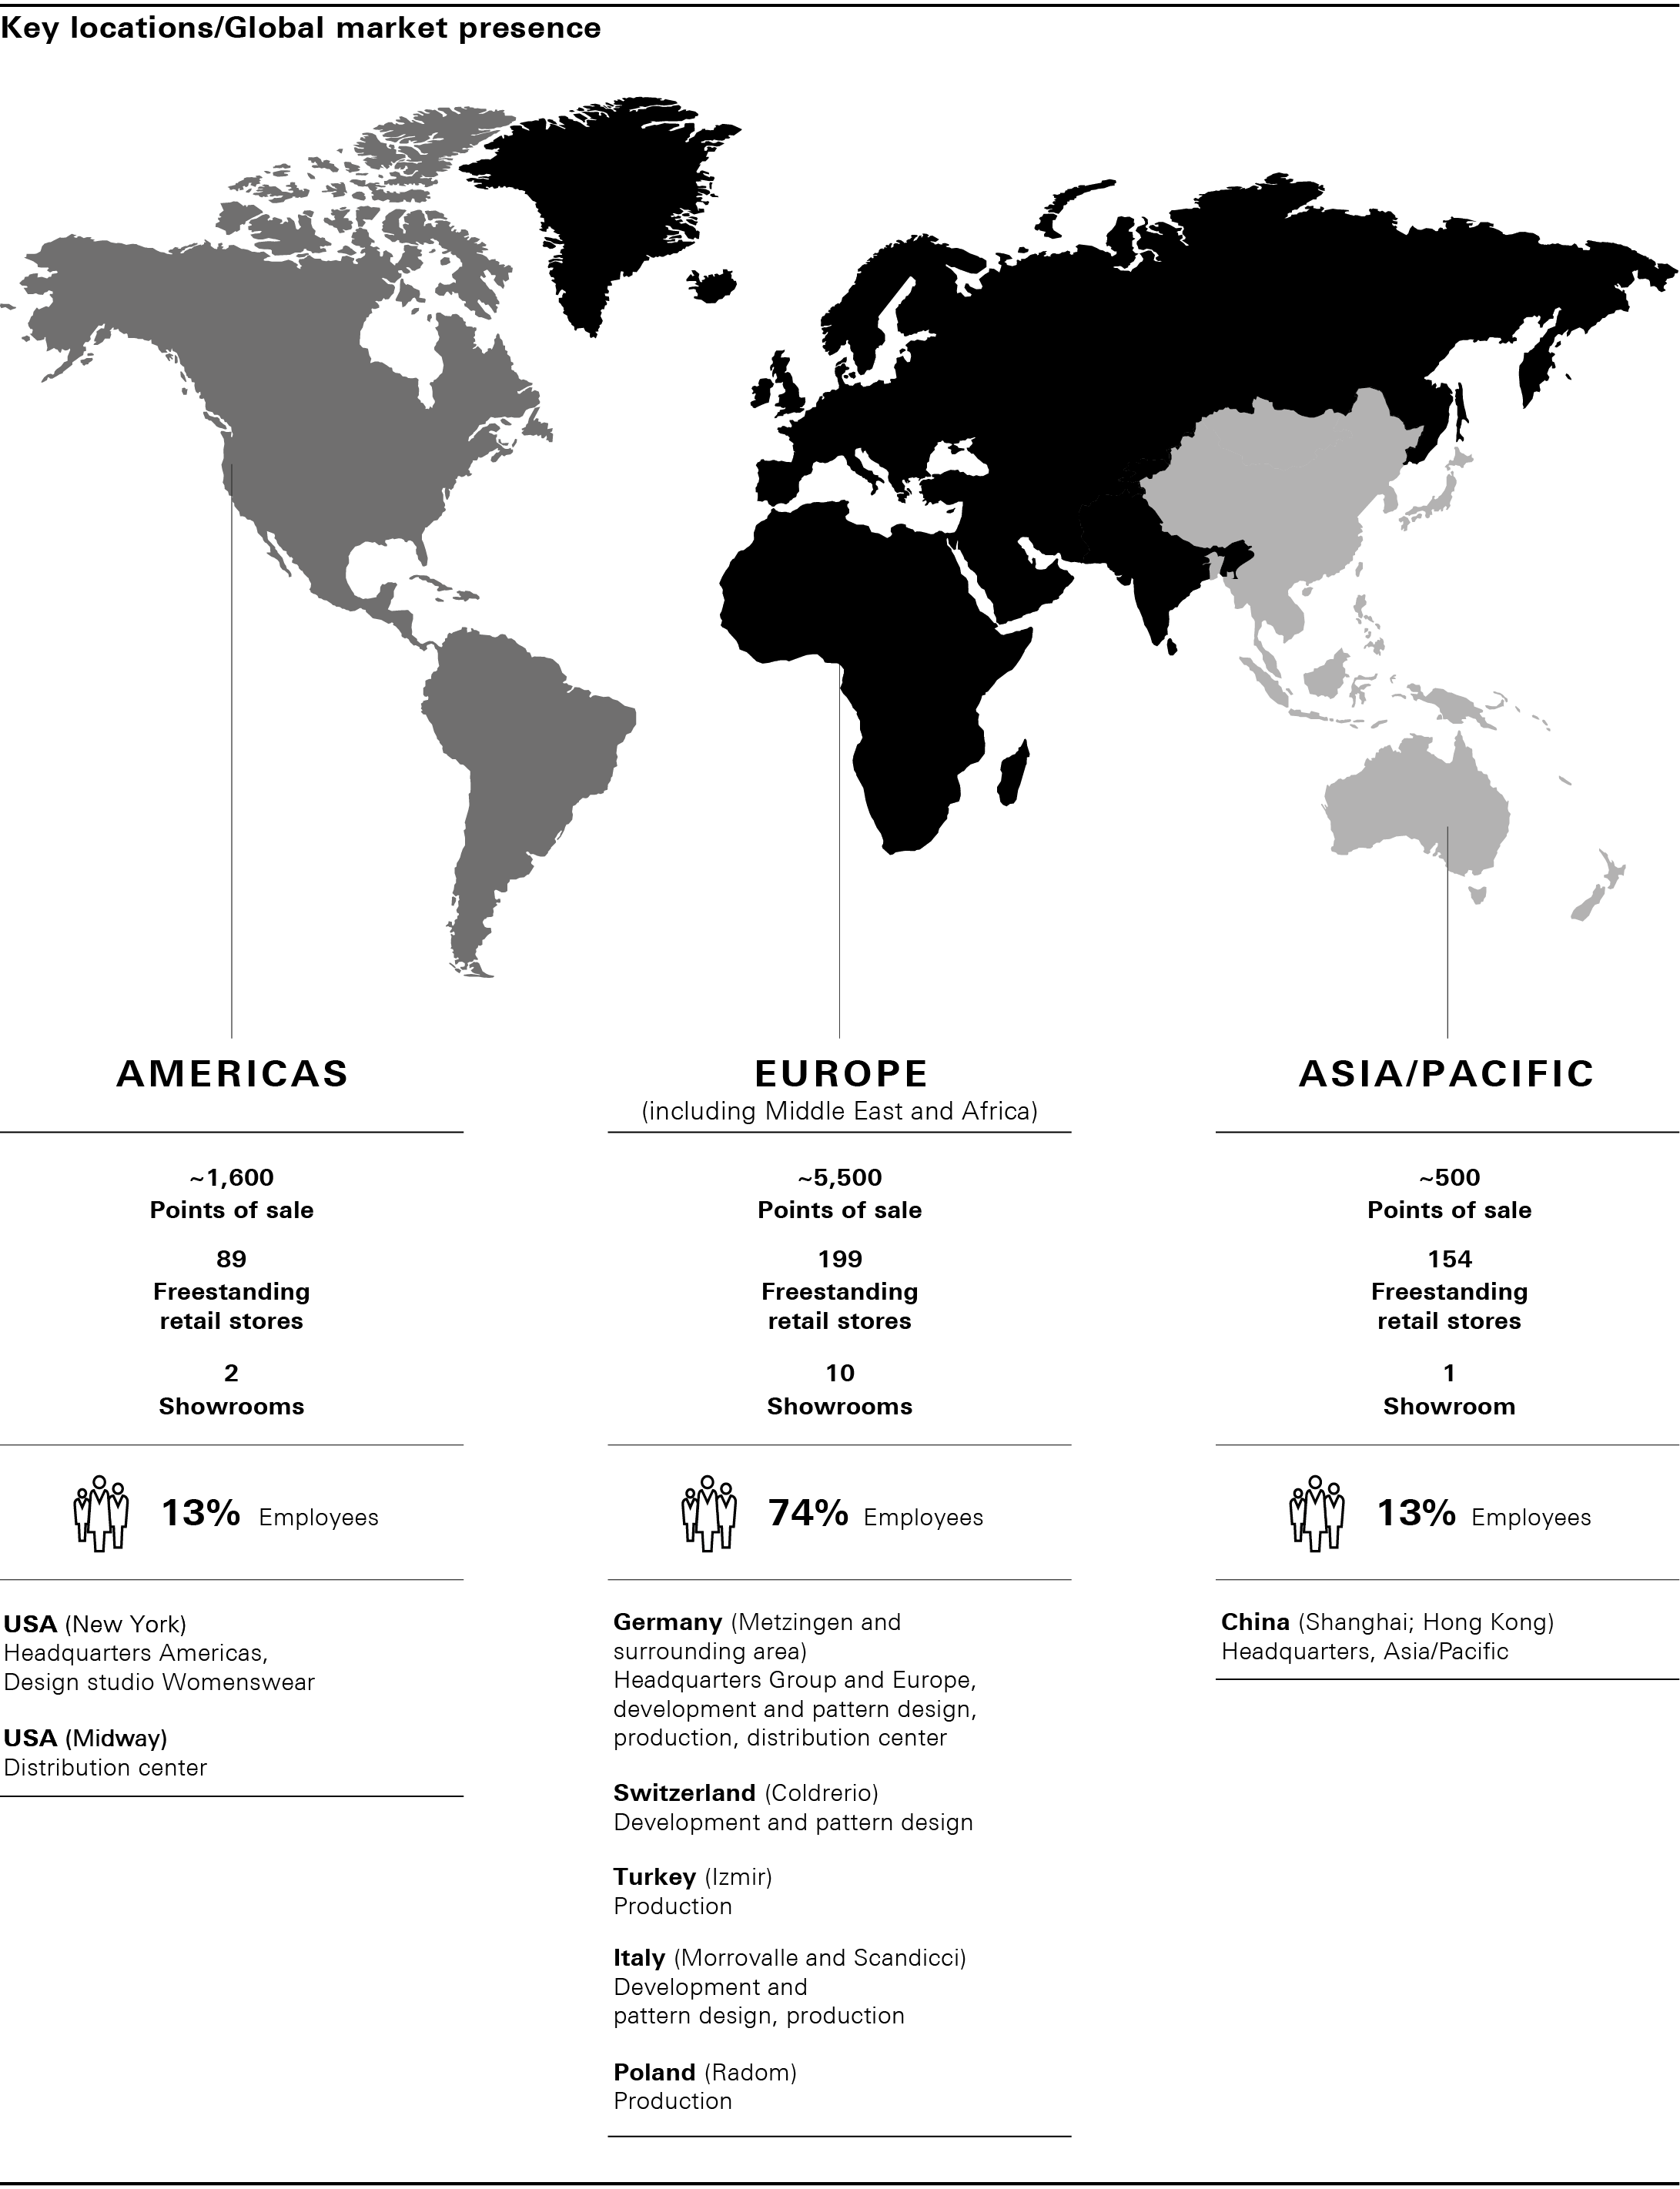 Key locations/Global market presence (graphic)